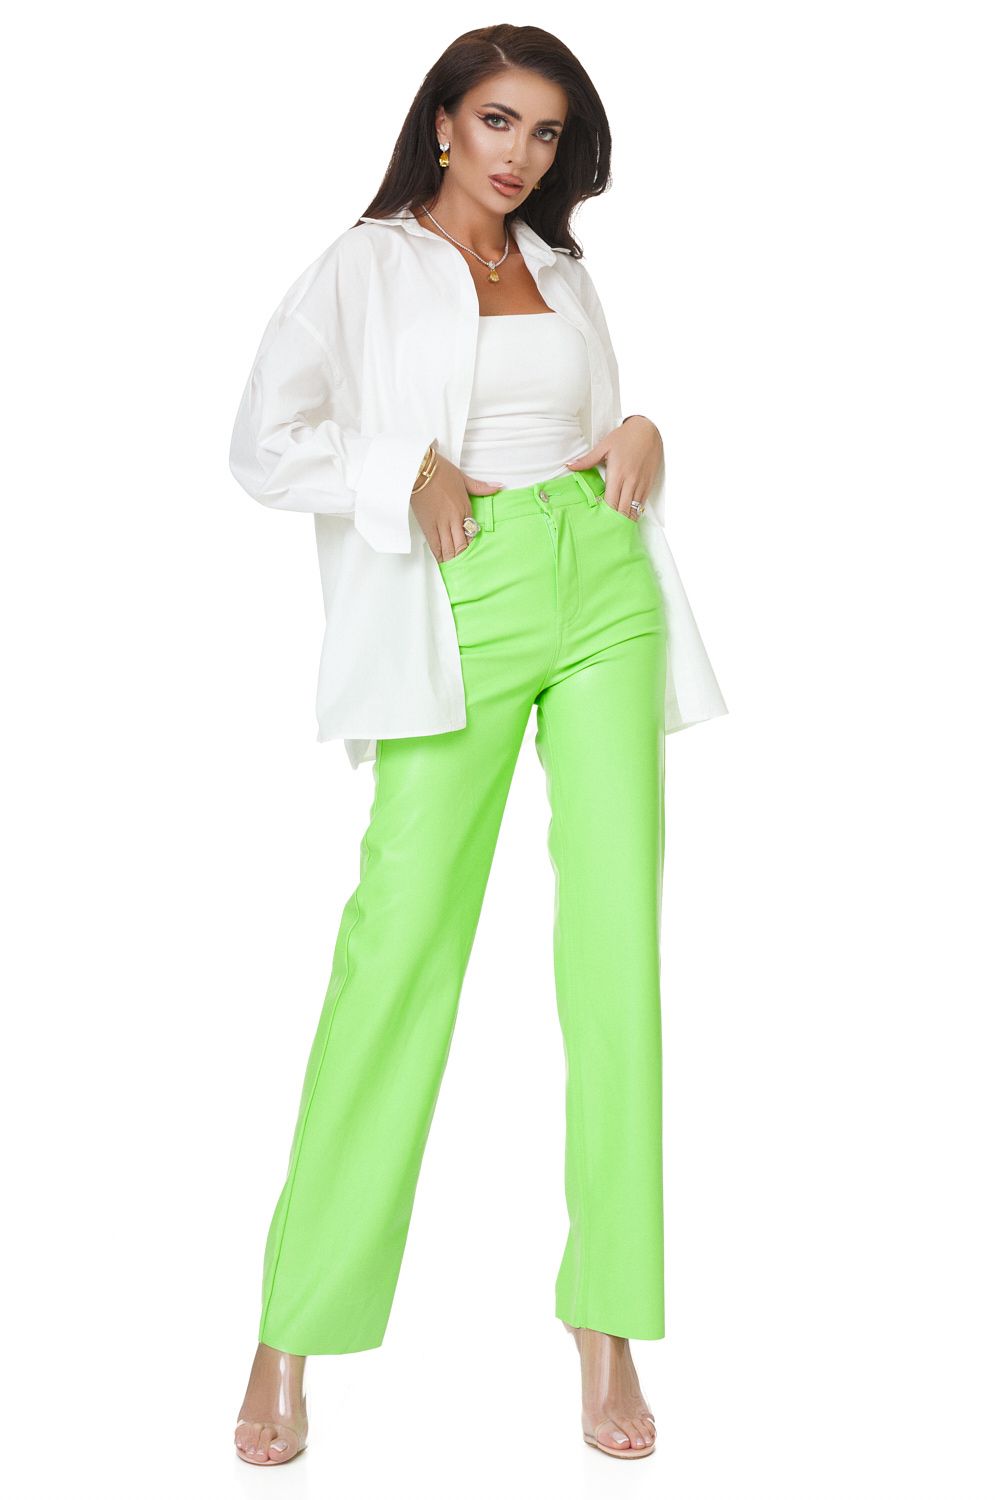 Ladies' smart trousers neon green Pintalo Bogas